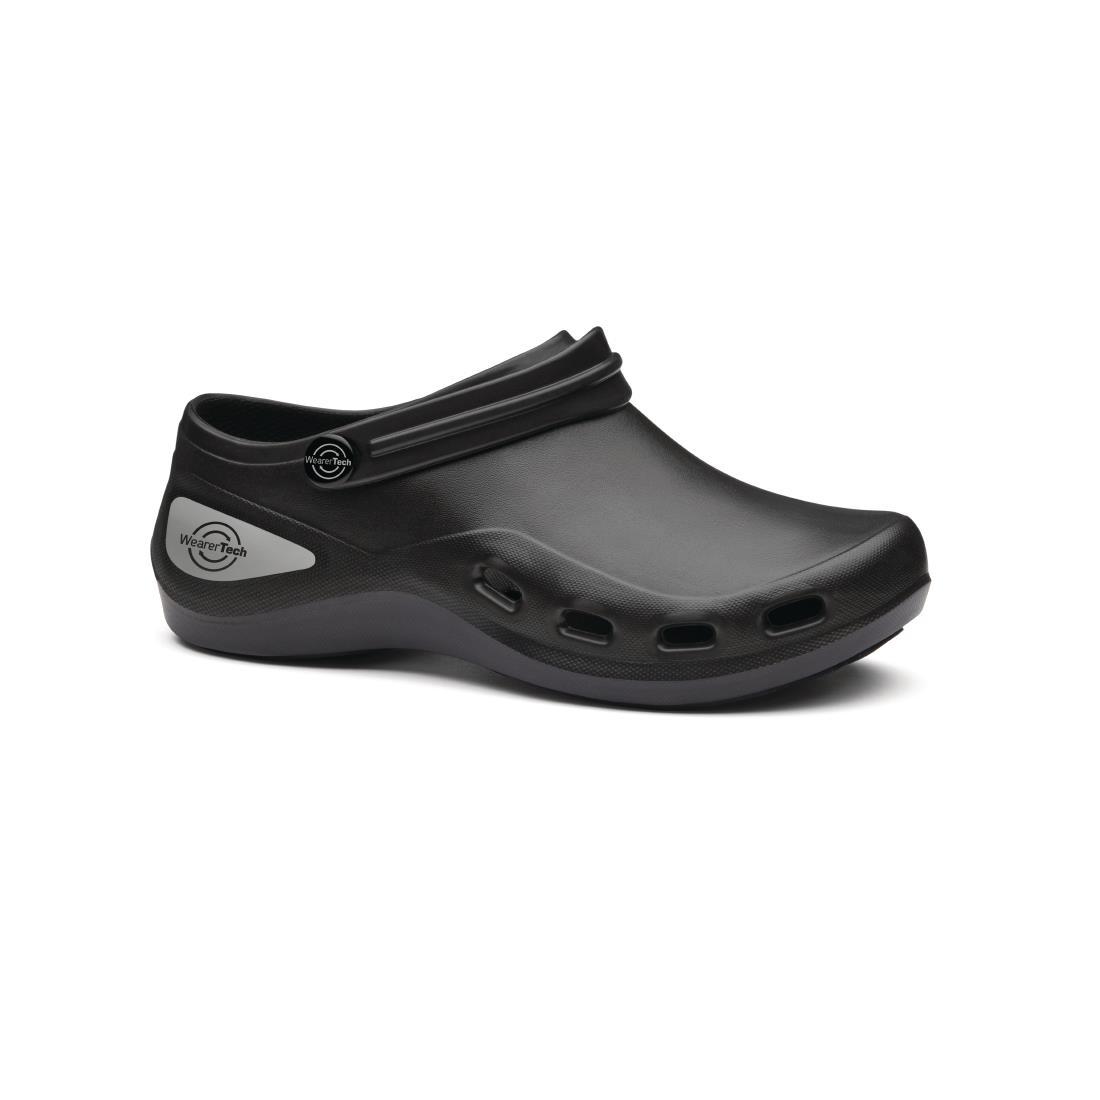 WearerTech Unisex Invigorate Black Safety Shoe Size 3 - BB195-36  - 1